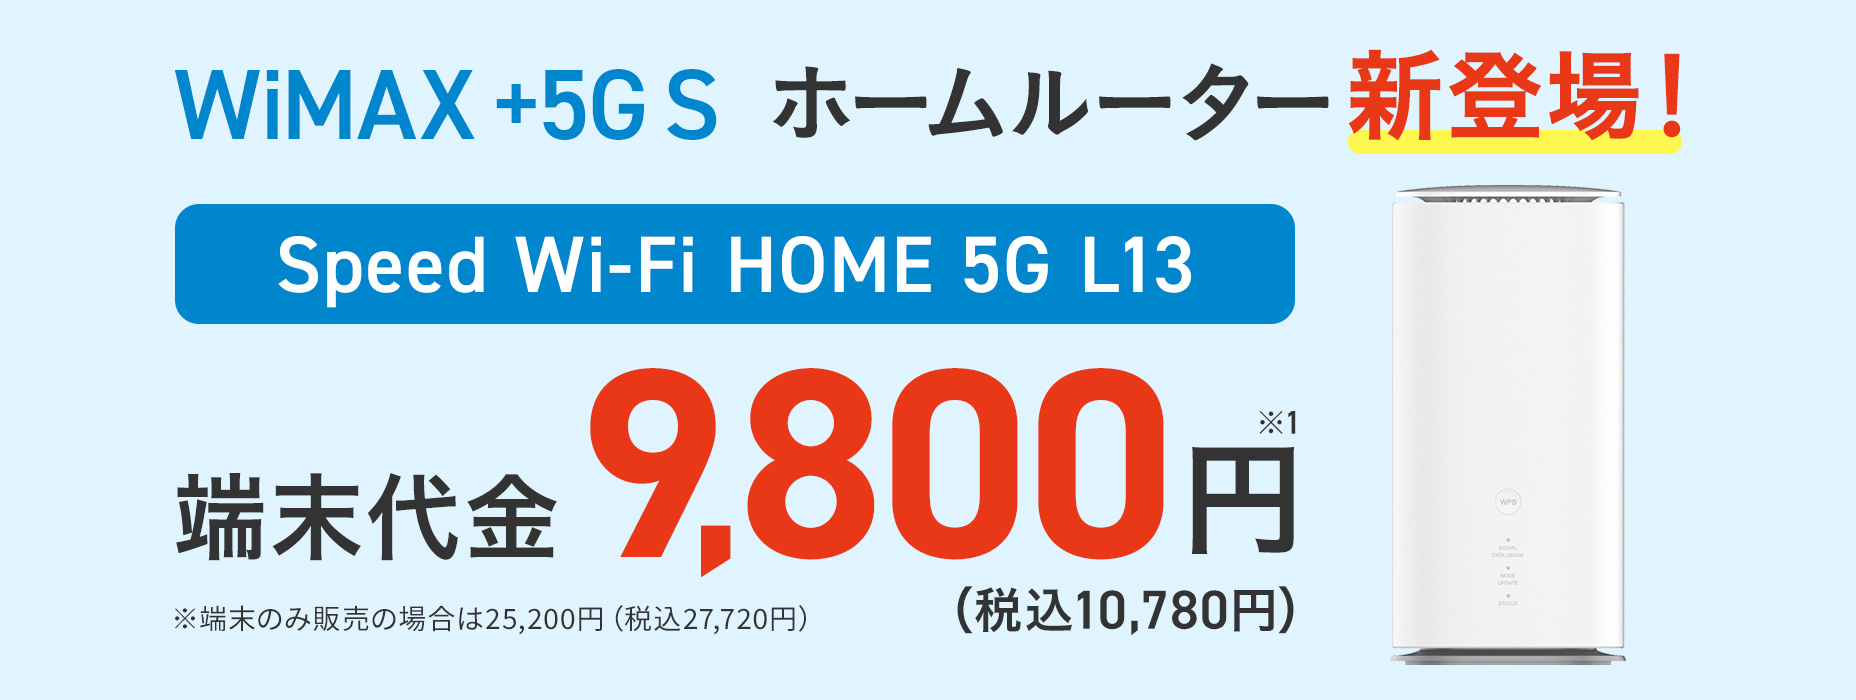 J:COM WiMAX +5G S | J:COM